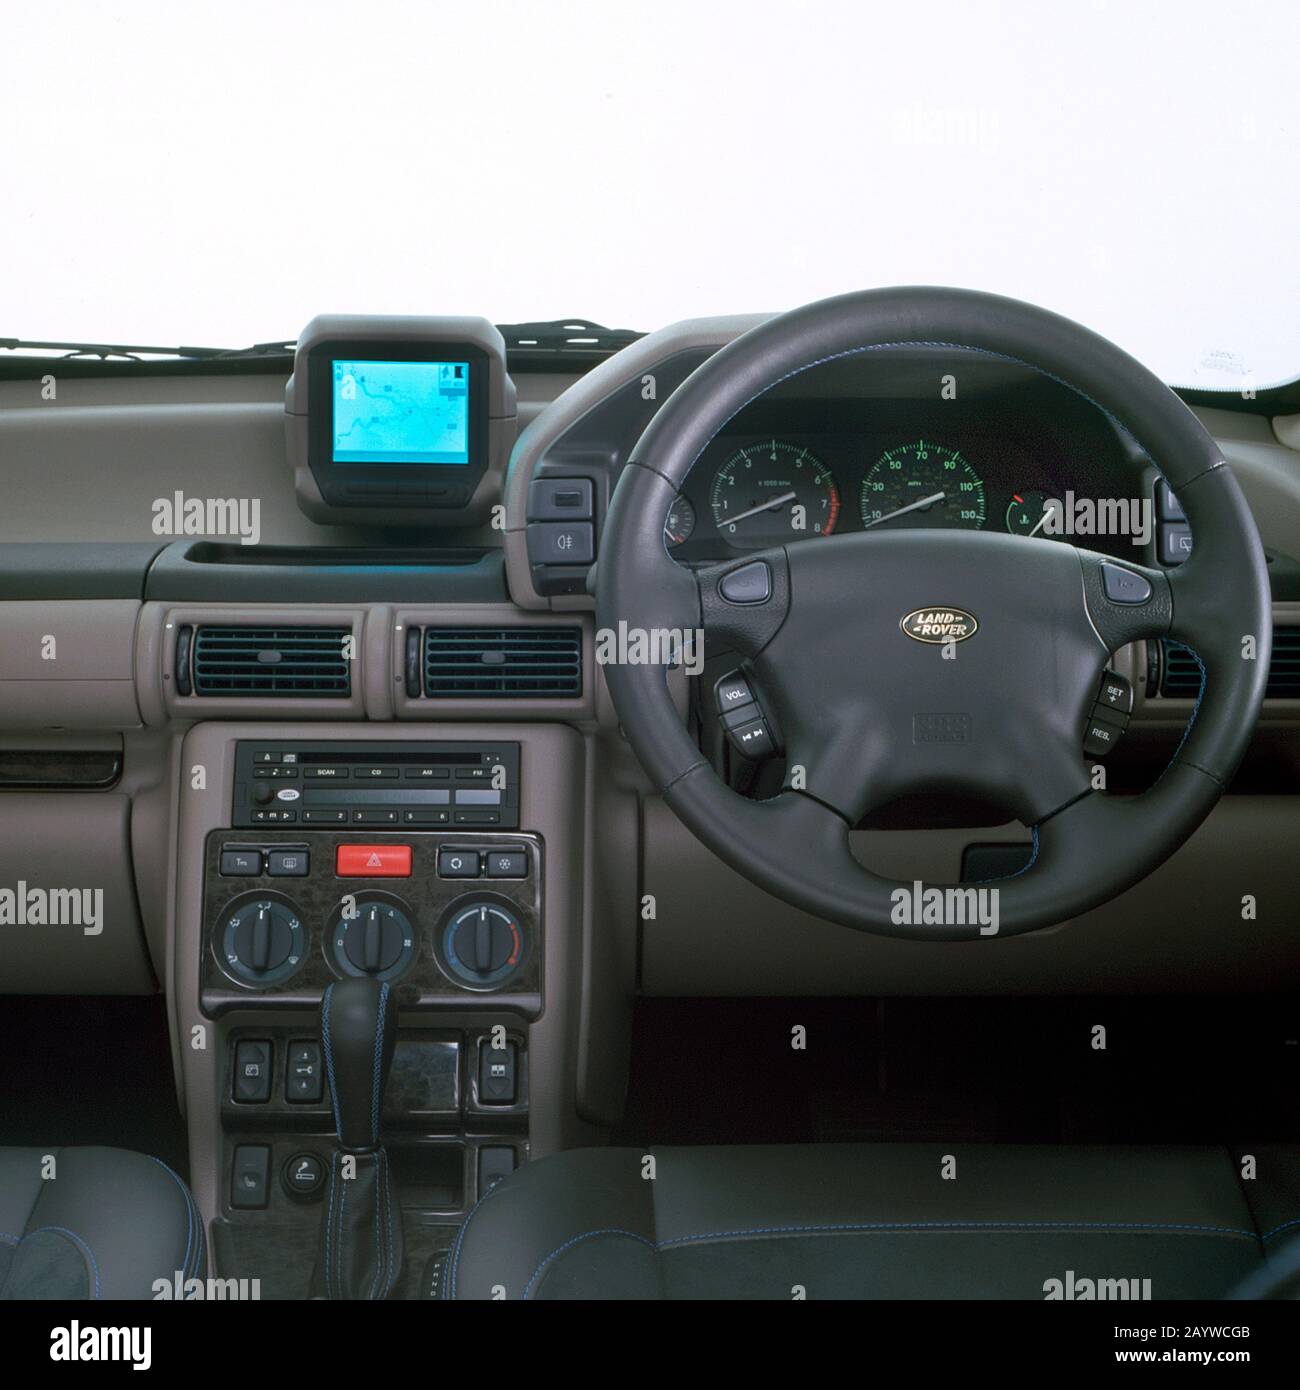 2001 Land Rover Freelander Autobiography interior Stock Photo